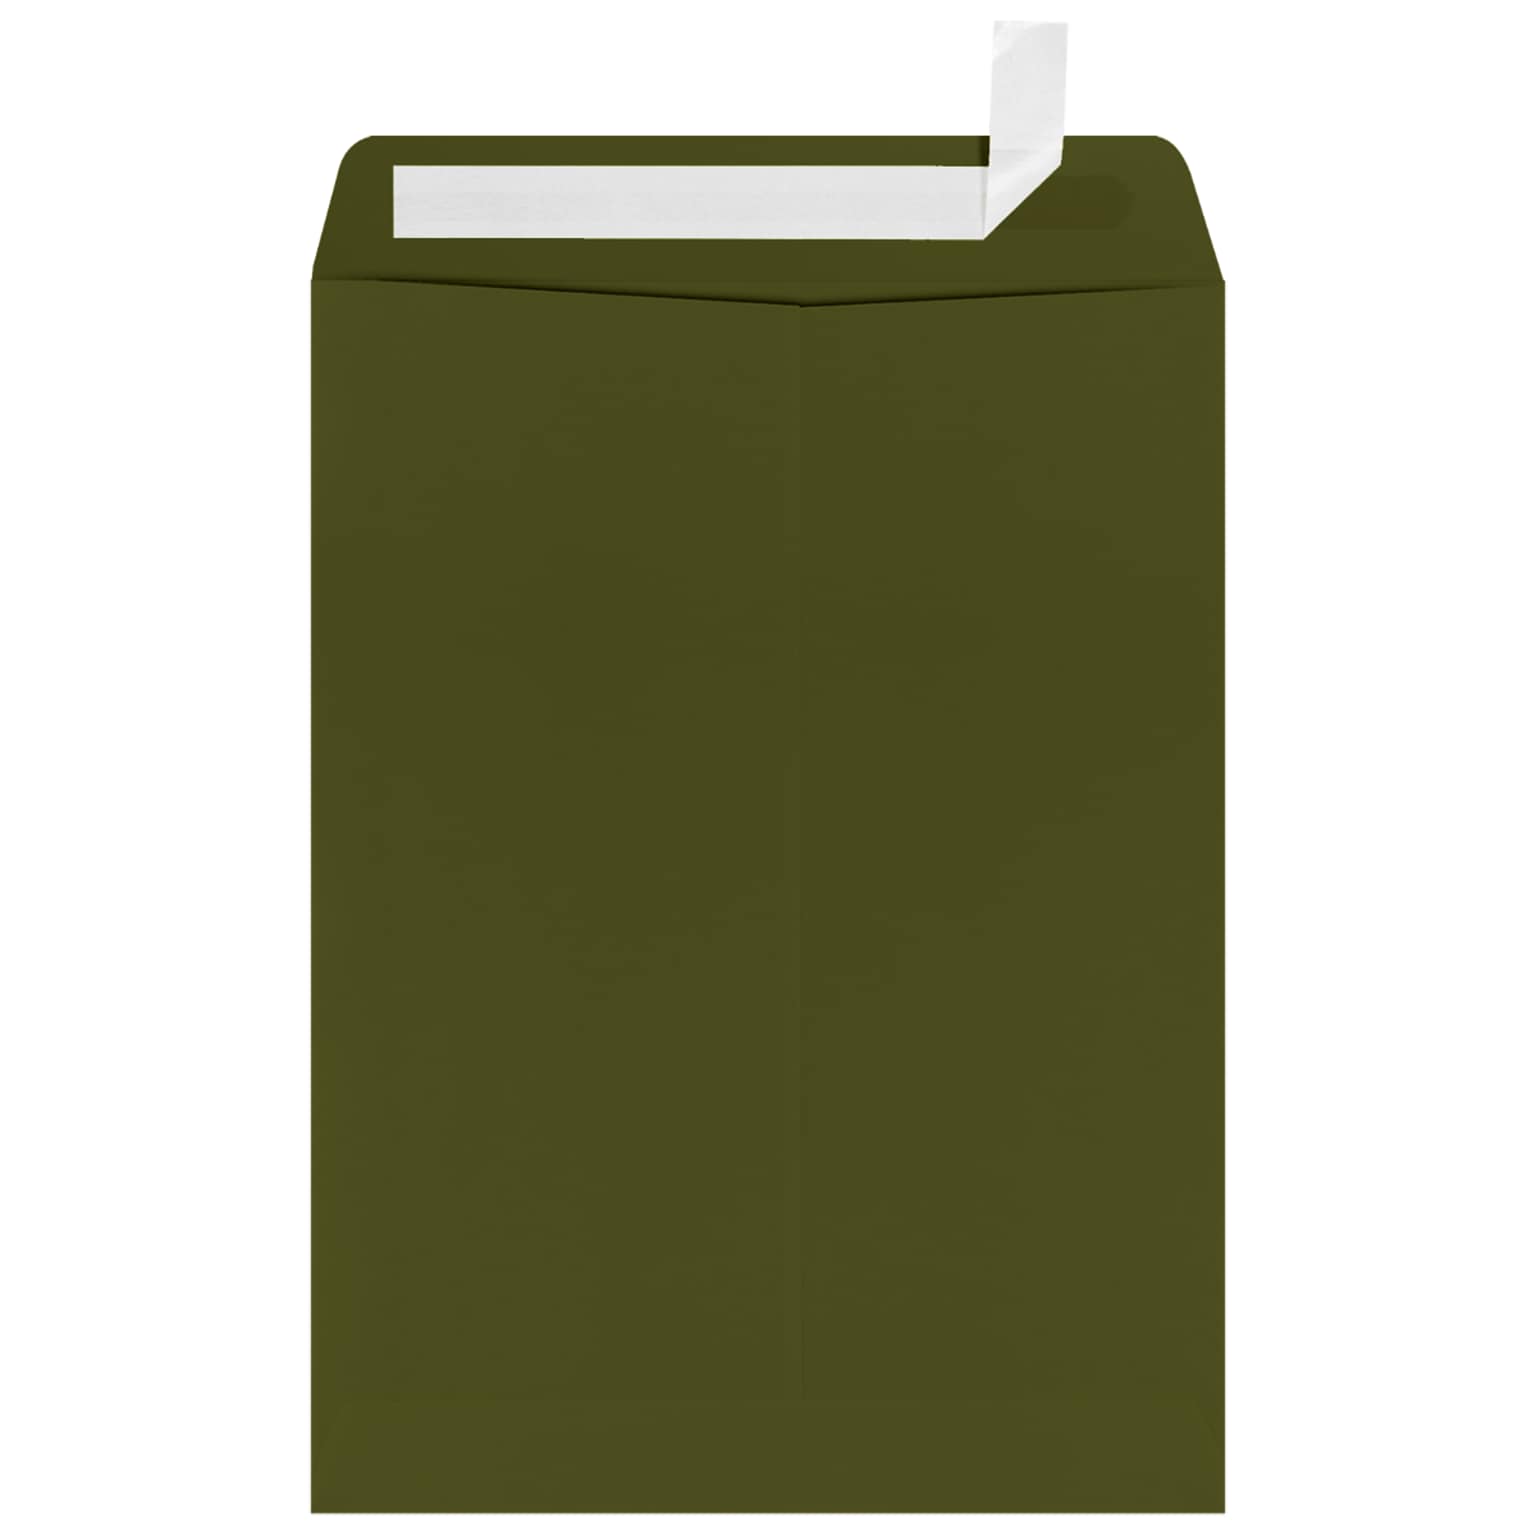 JAM Paper 9 x 12 Catalog Mailing Envelopes, Olive Green, 50 Pack (4894-81-50)